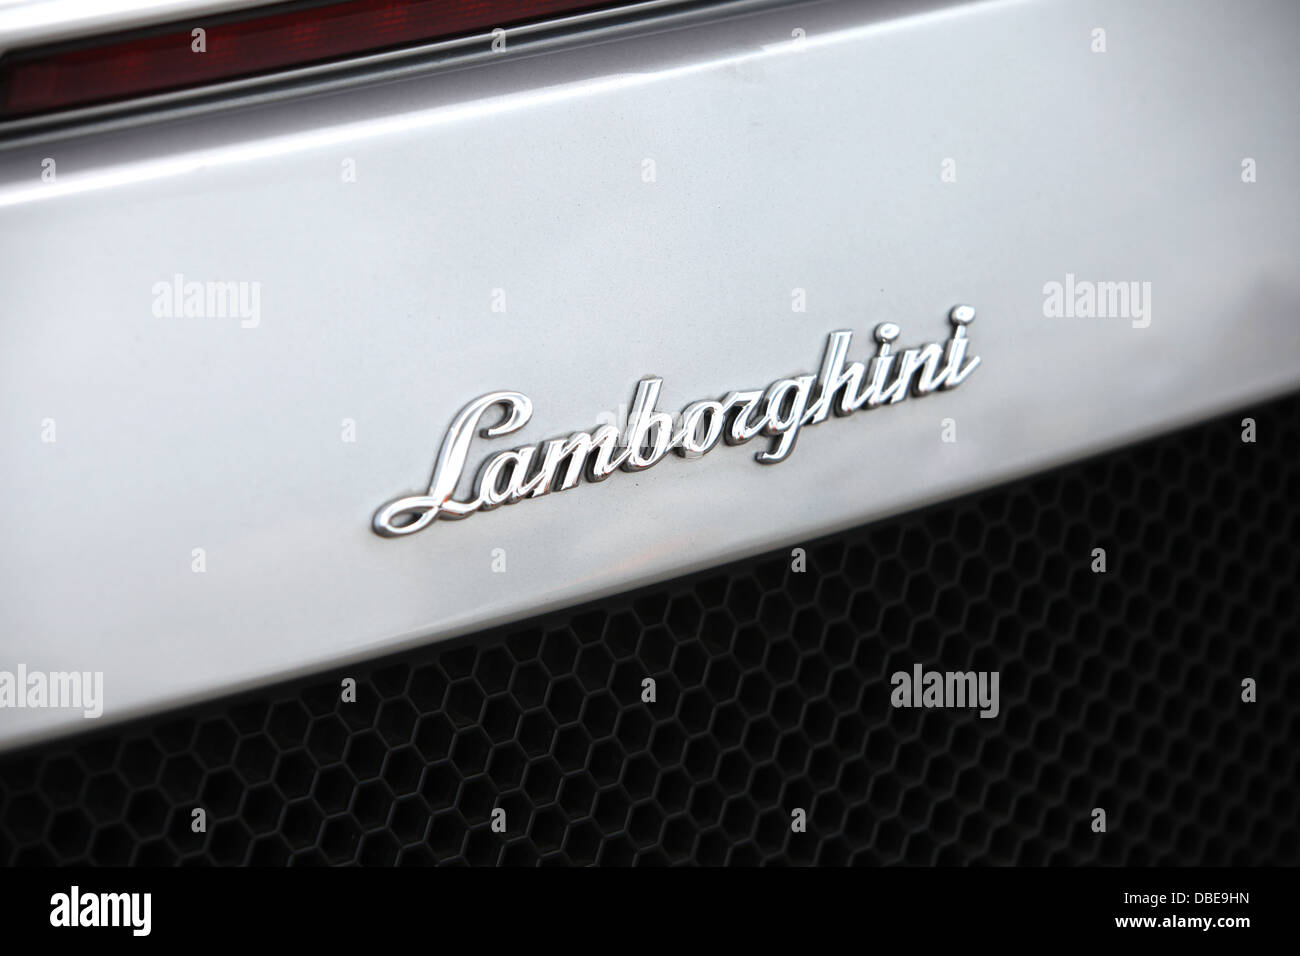 Lamborghini badge Stock Photo - Alamy